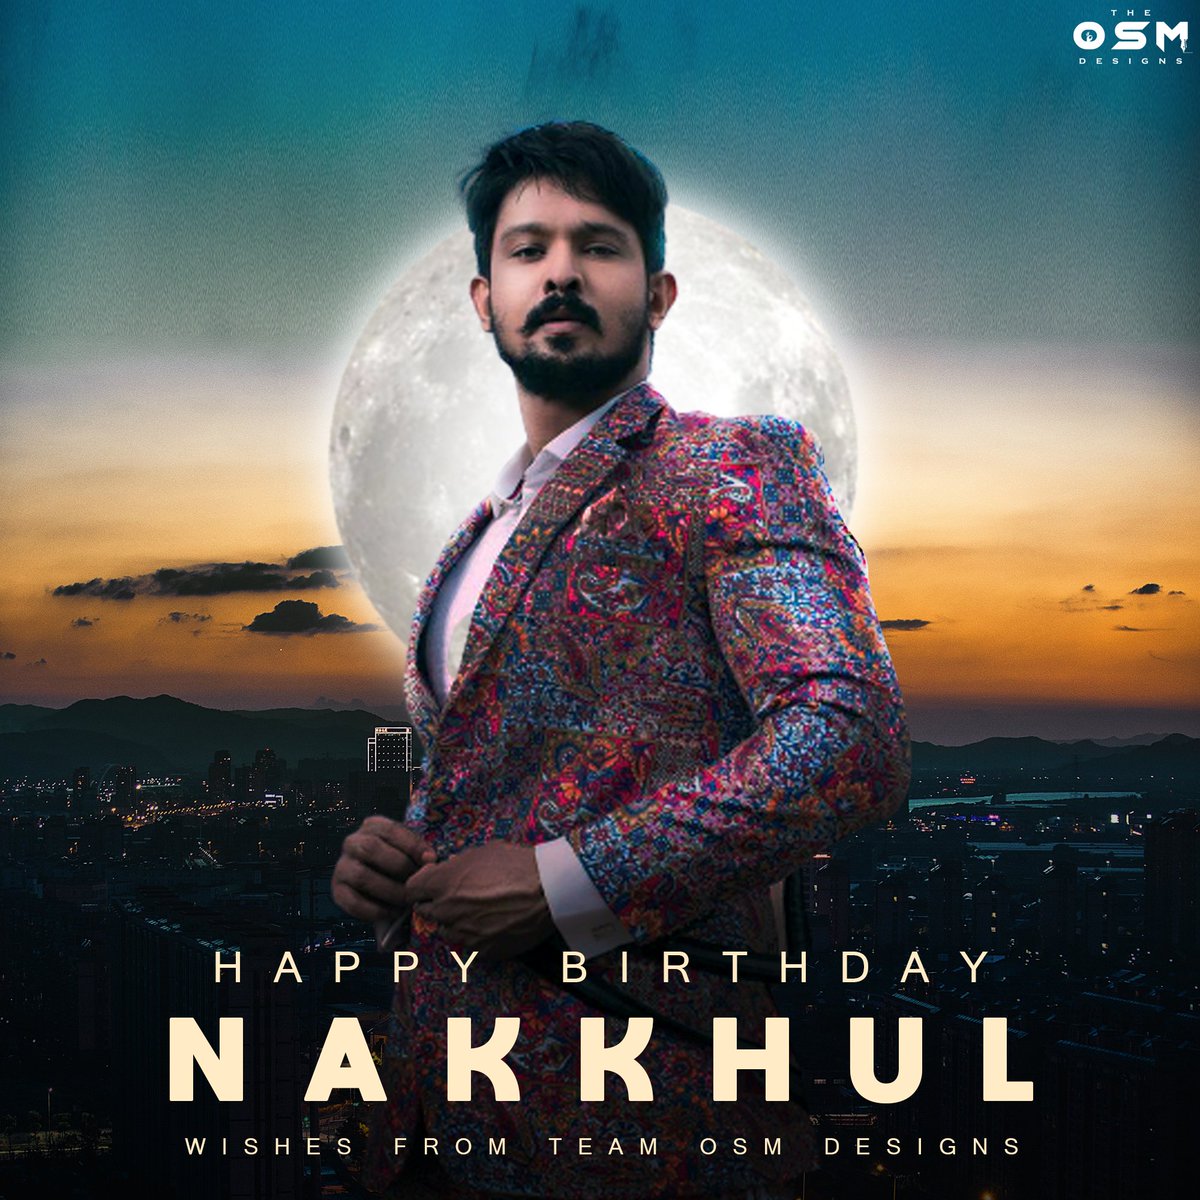 Wishing Dearest Actor & playback Singer @Nakkhul_Jaidev Sir, a Very Happy Birthday..Best Wishes ❤️

Designed by @TheOsmDesigns 

#HBDNakkhul @srubee26 @PRO_Priya @spp_media